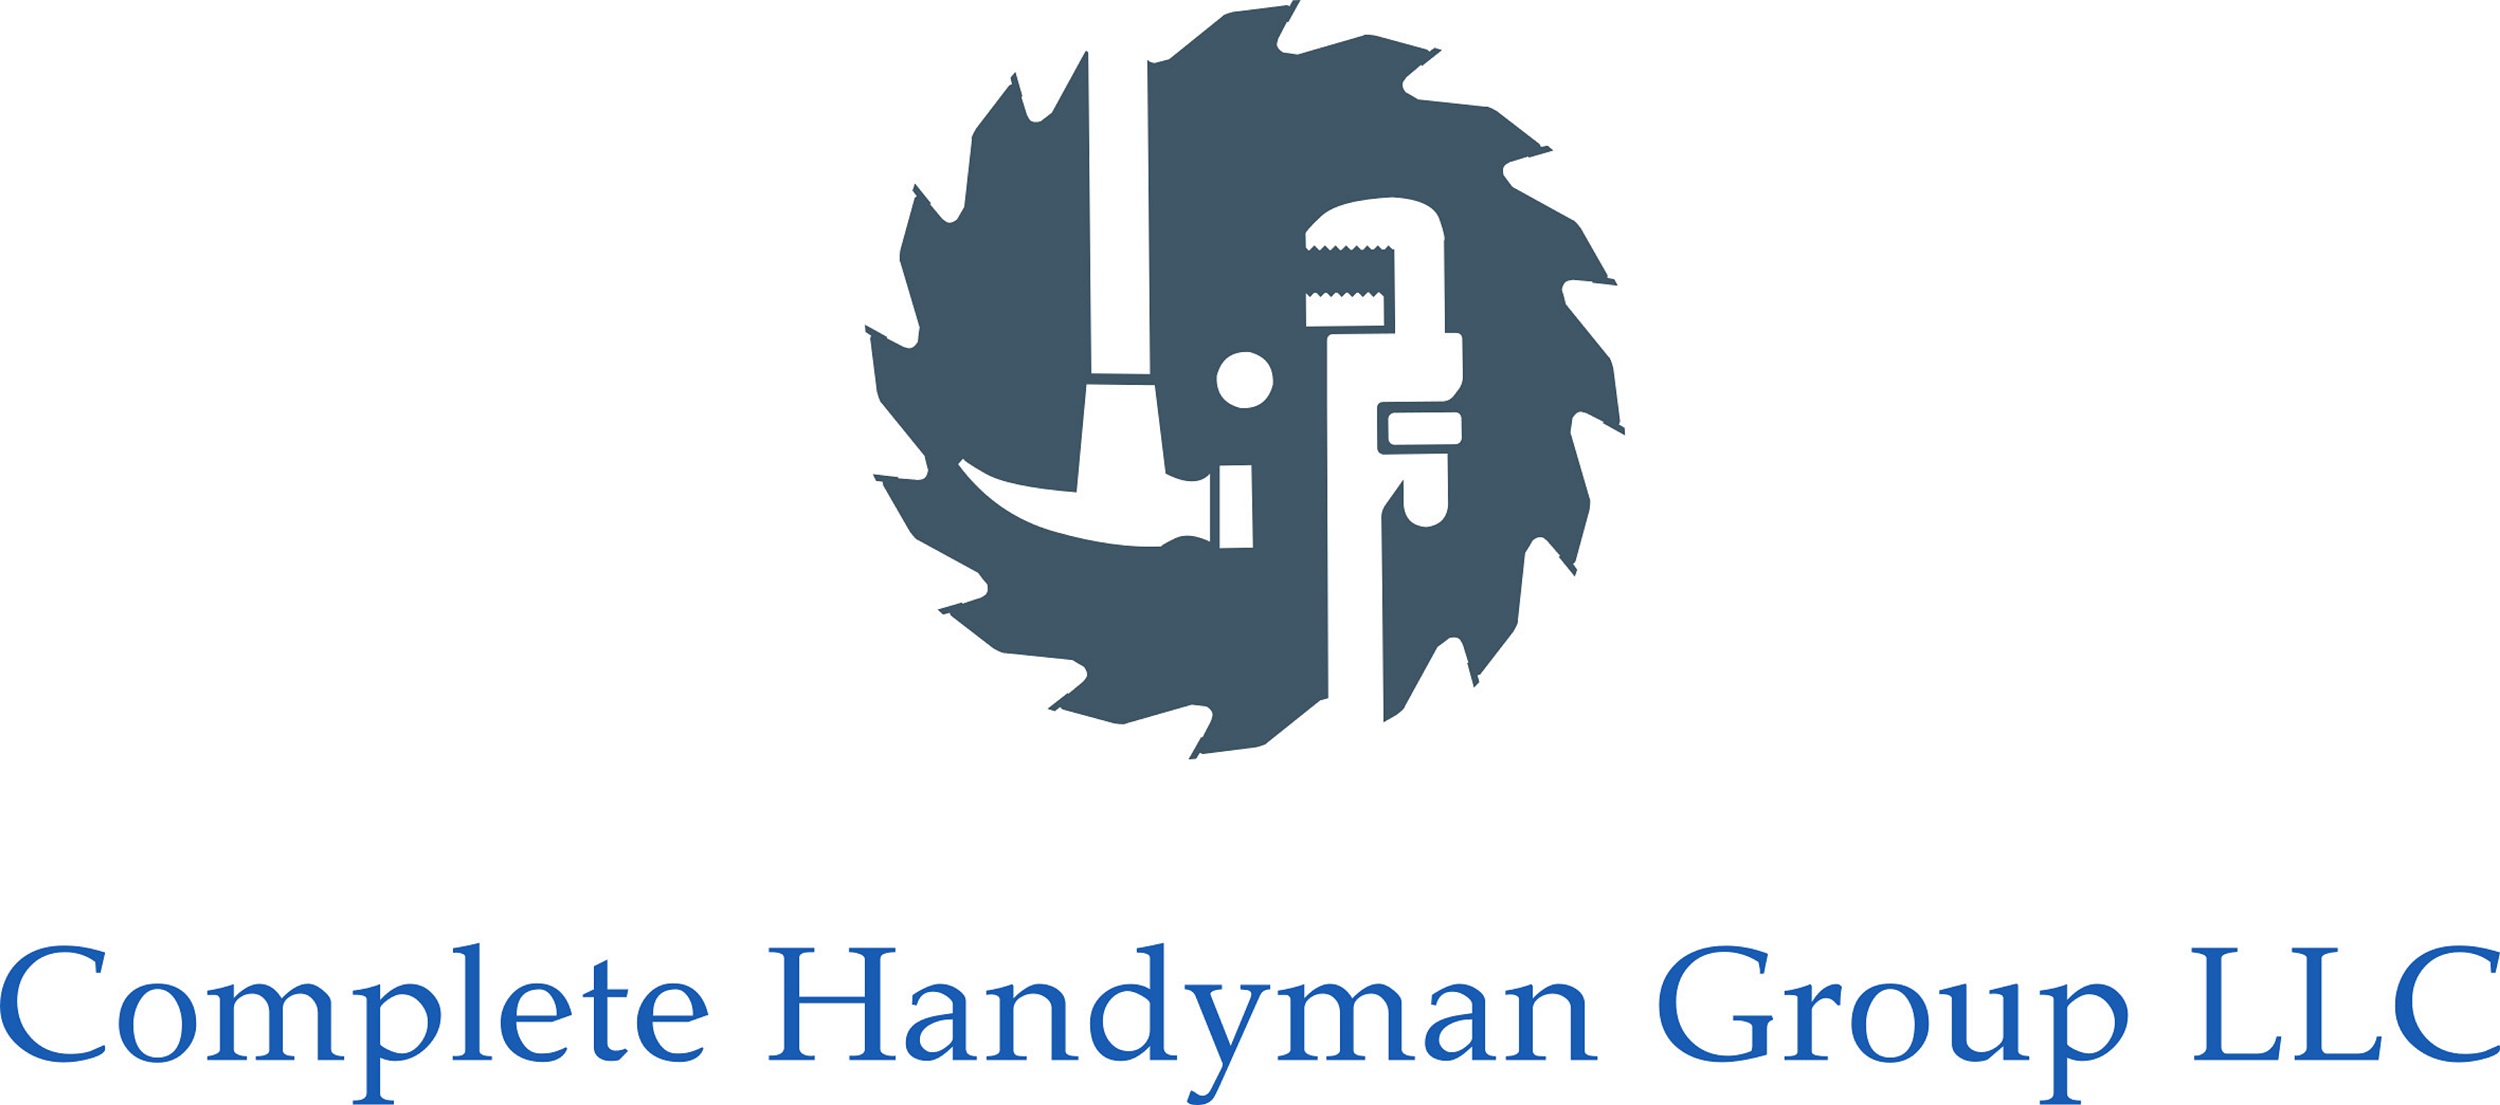 Complete Handyman Group